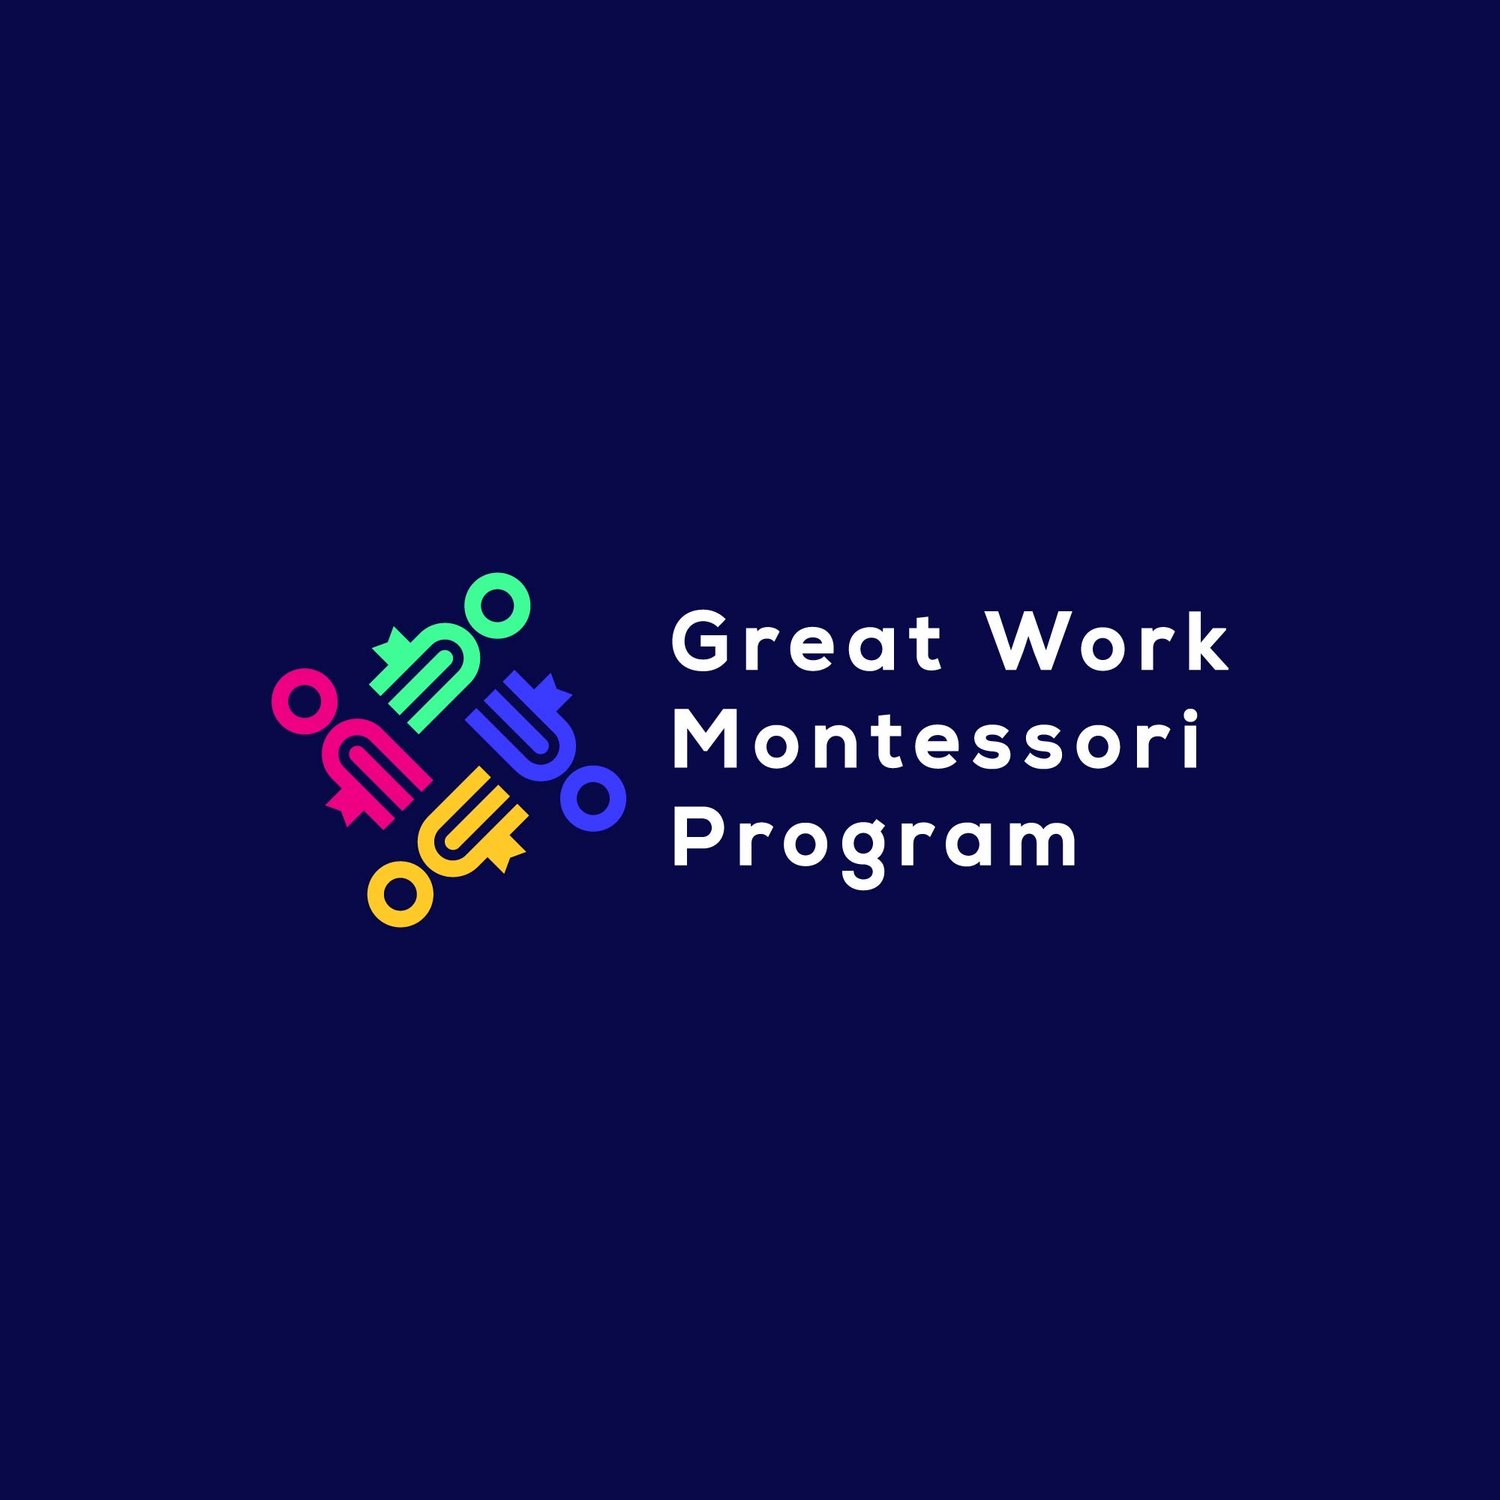 Great Work Montessori Program